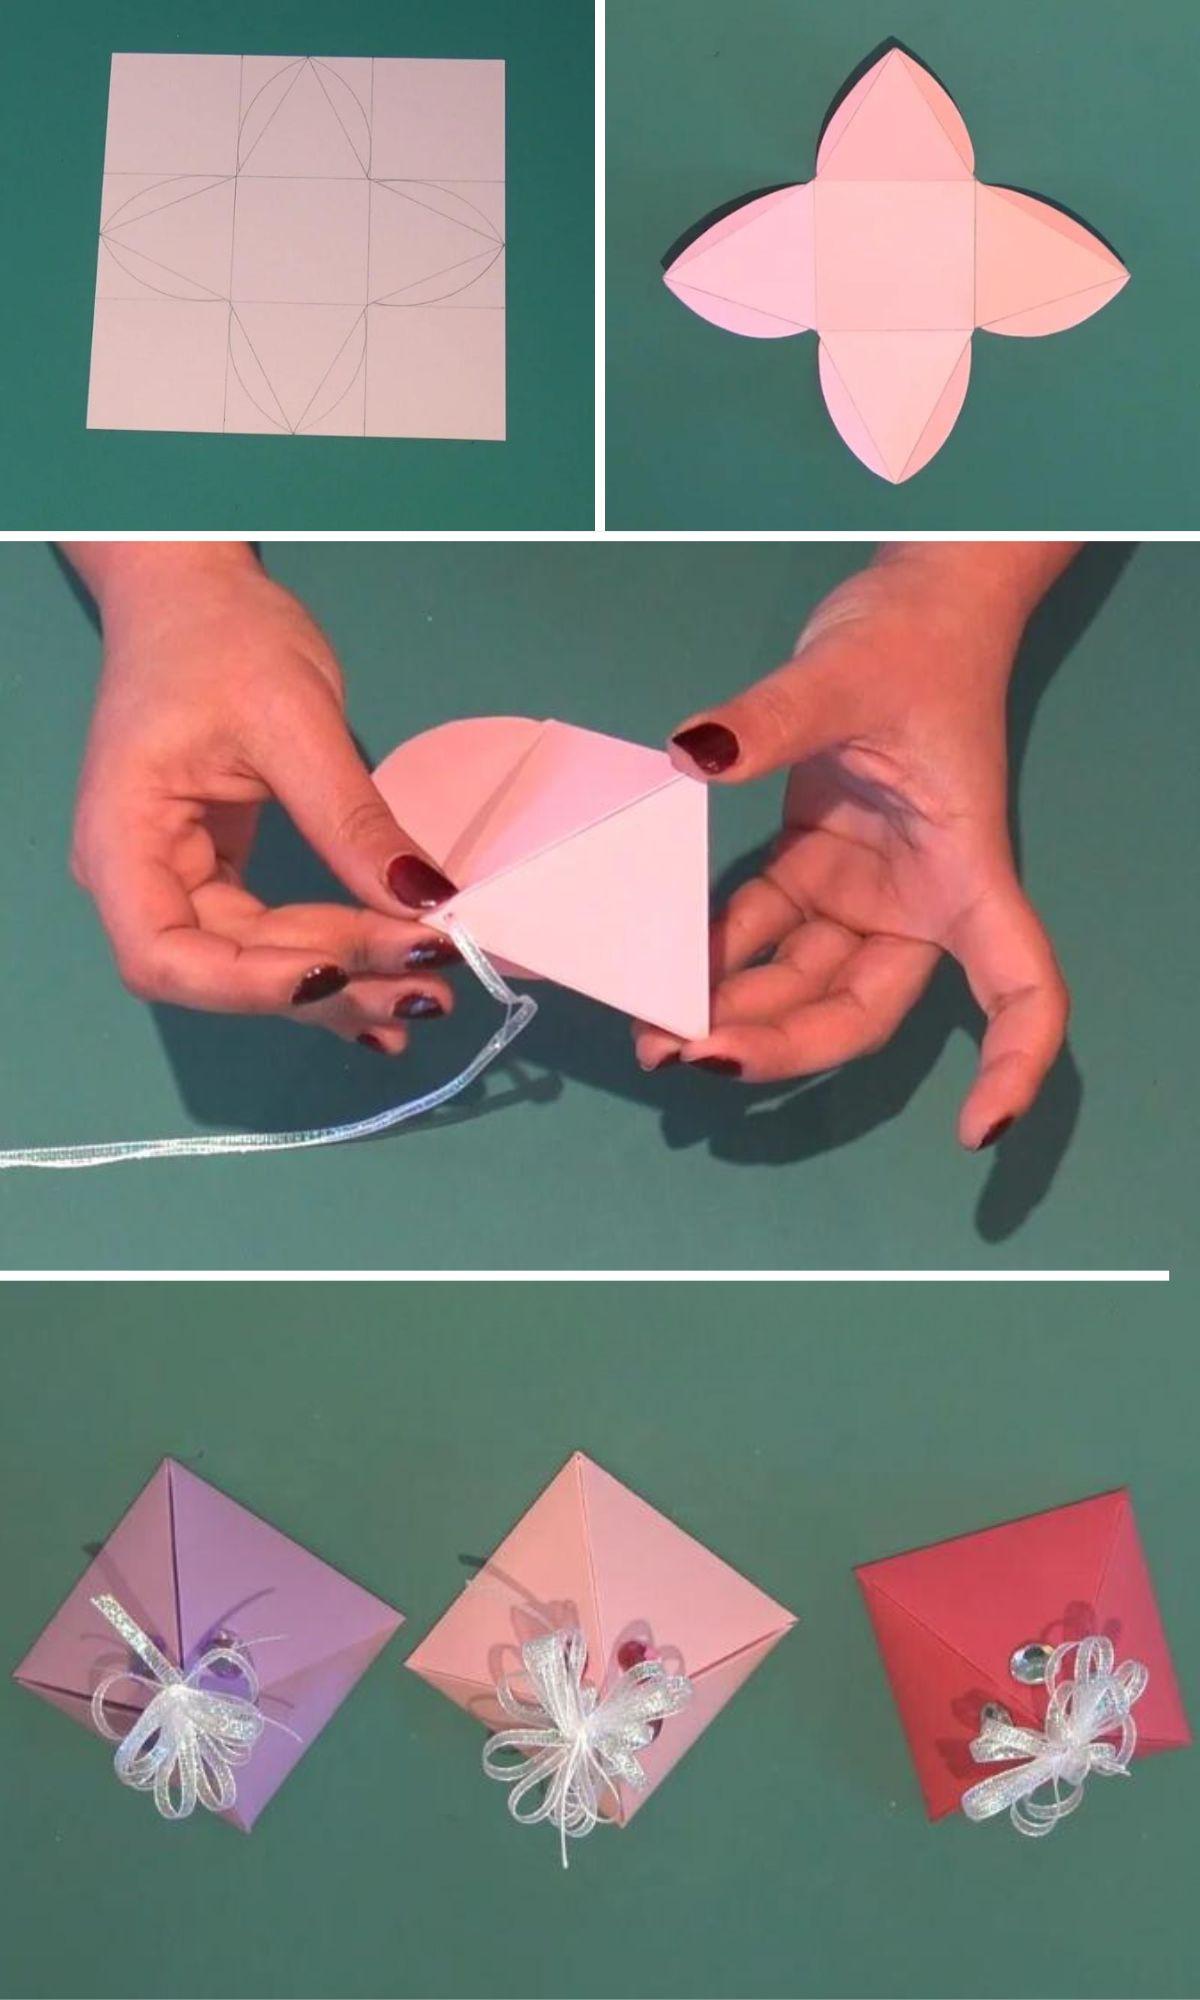 DIY Origami pyramid gift boxes.